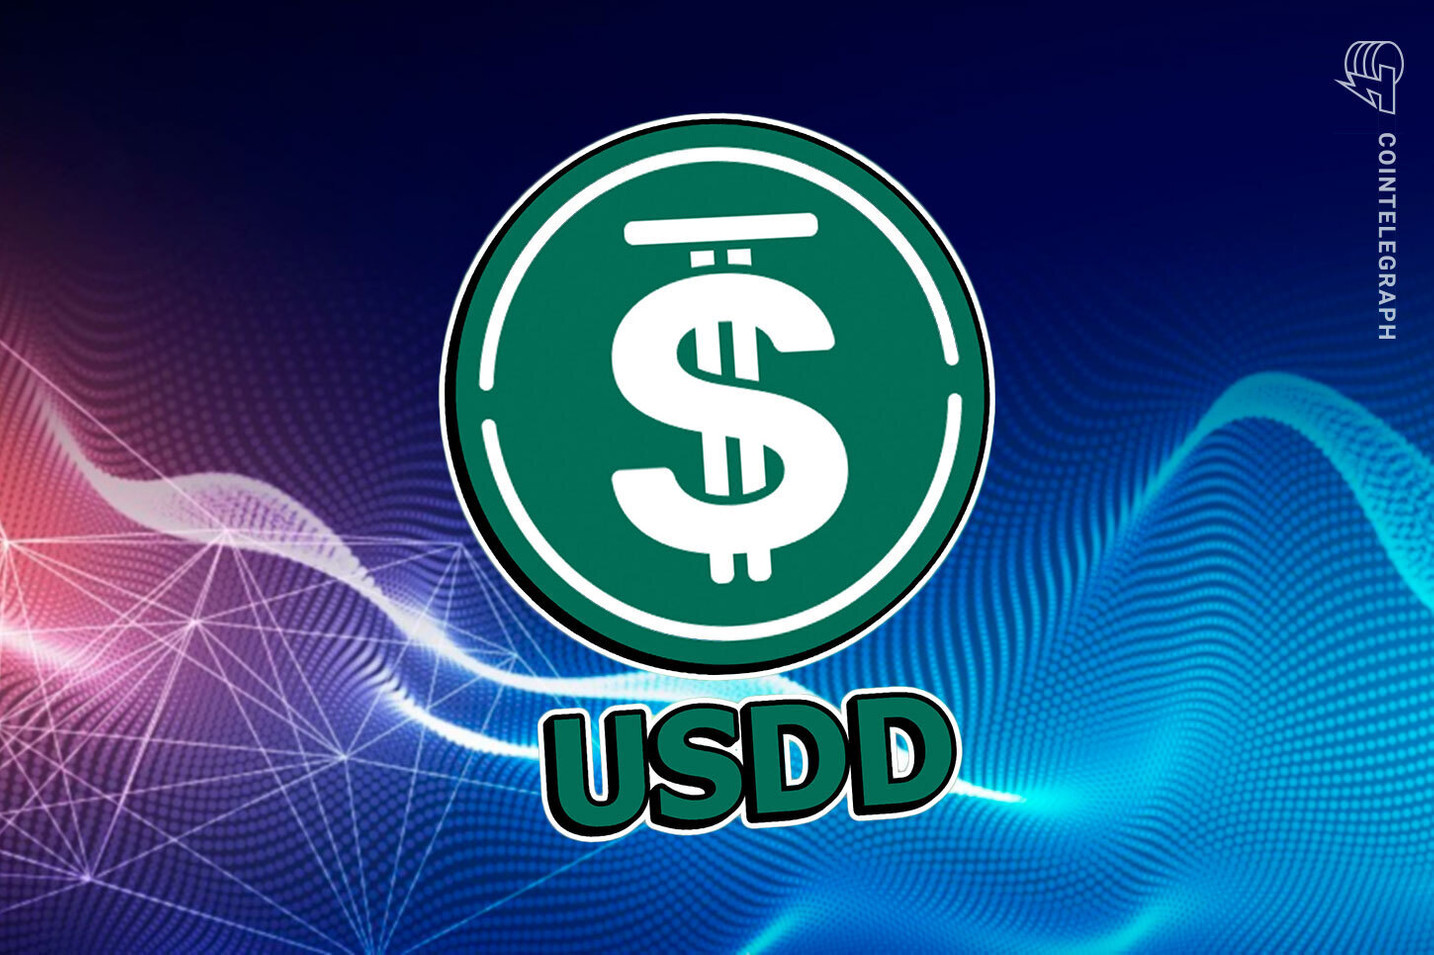 1434 aHR0cHM6Ly9zMy5jb2ludGVsZWdyYXBoLmNvbS9zdG9yYWdlL3VwbG9hZHMvdmlldy80ZjgxZmJiMWRlMDQxMjcwOGRkOWY3YWJmODI2ODBkNS5qcGc - کاهش قیمت استیبل کوین USDD به 0.97 دلار